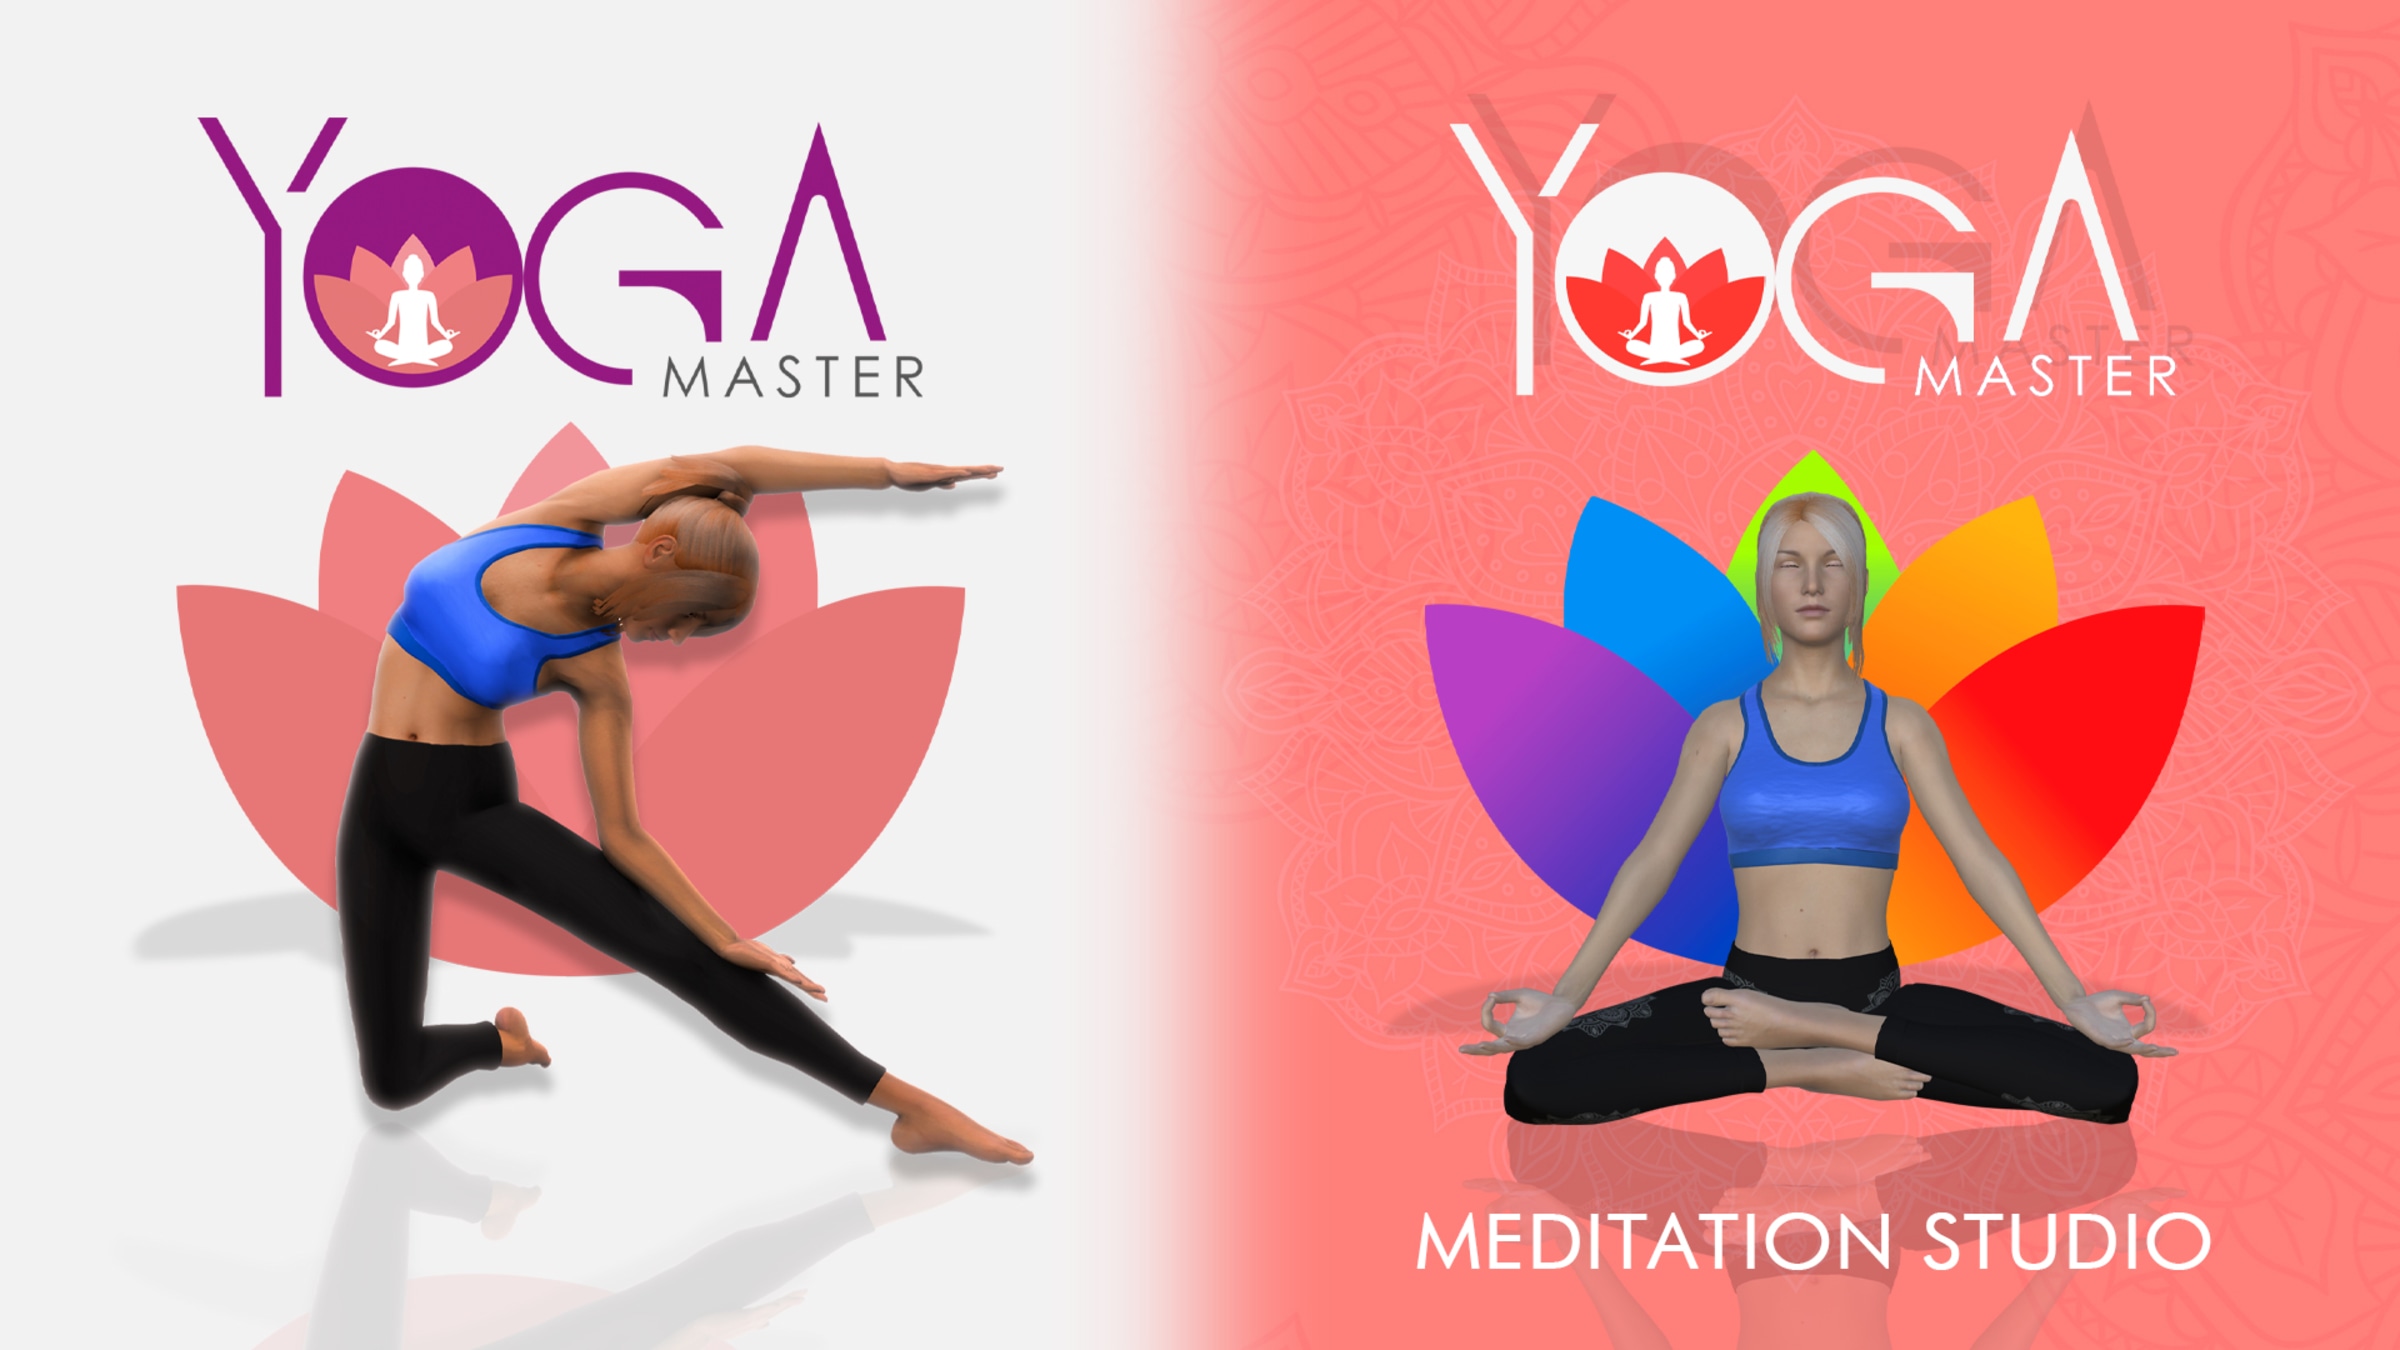 Yoga Master Meditation Studio Bundle For Nintendo Switch Nintendo Official Site